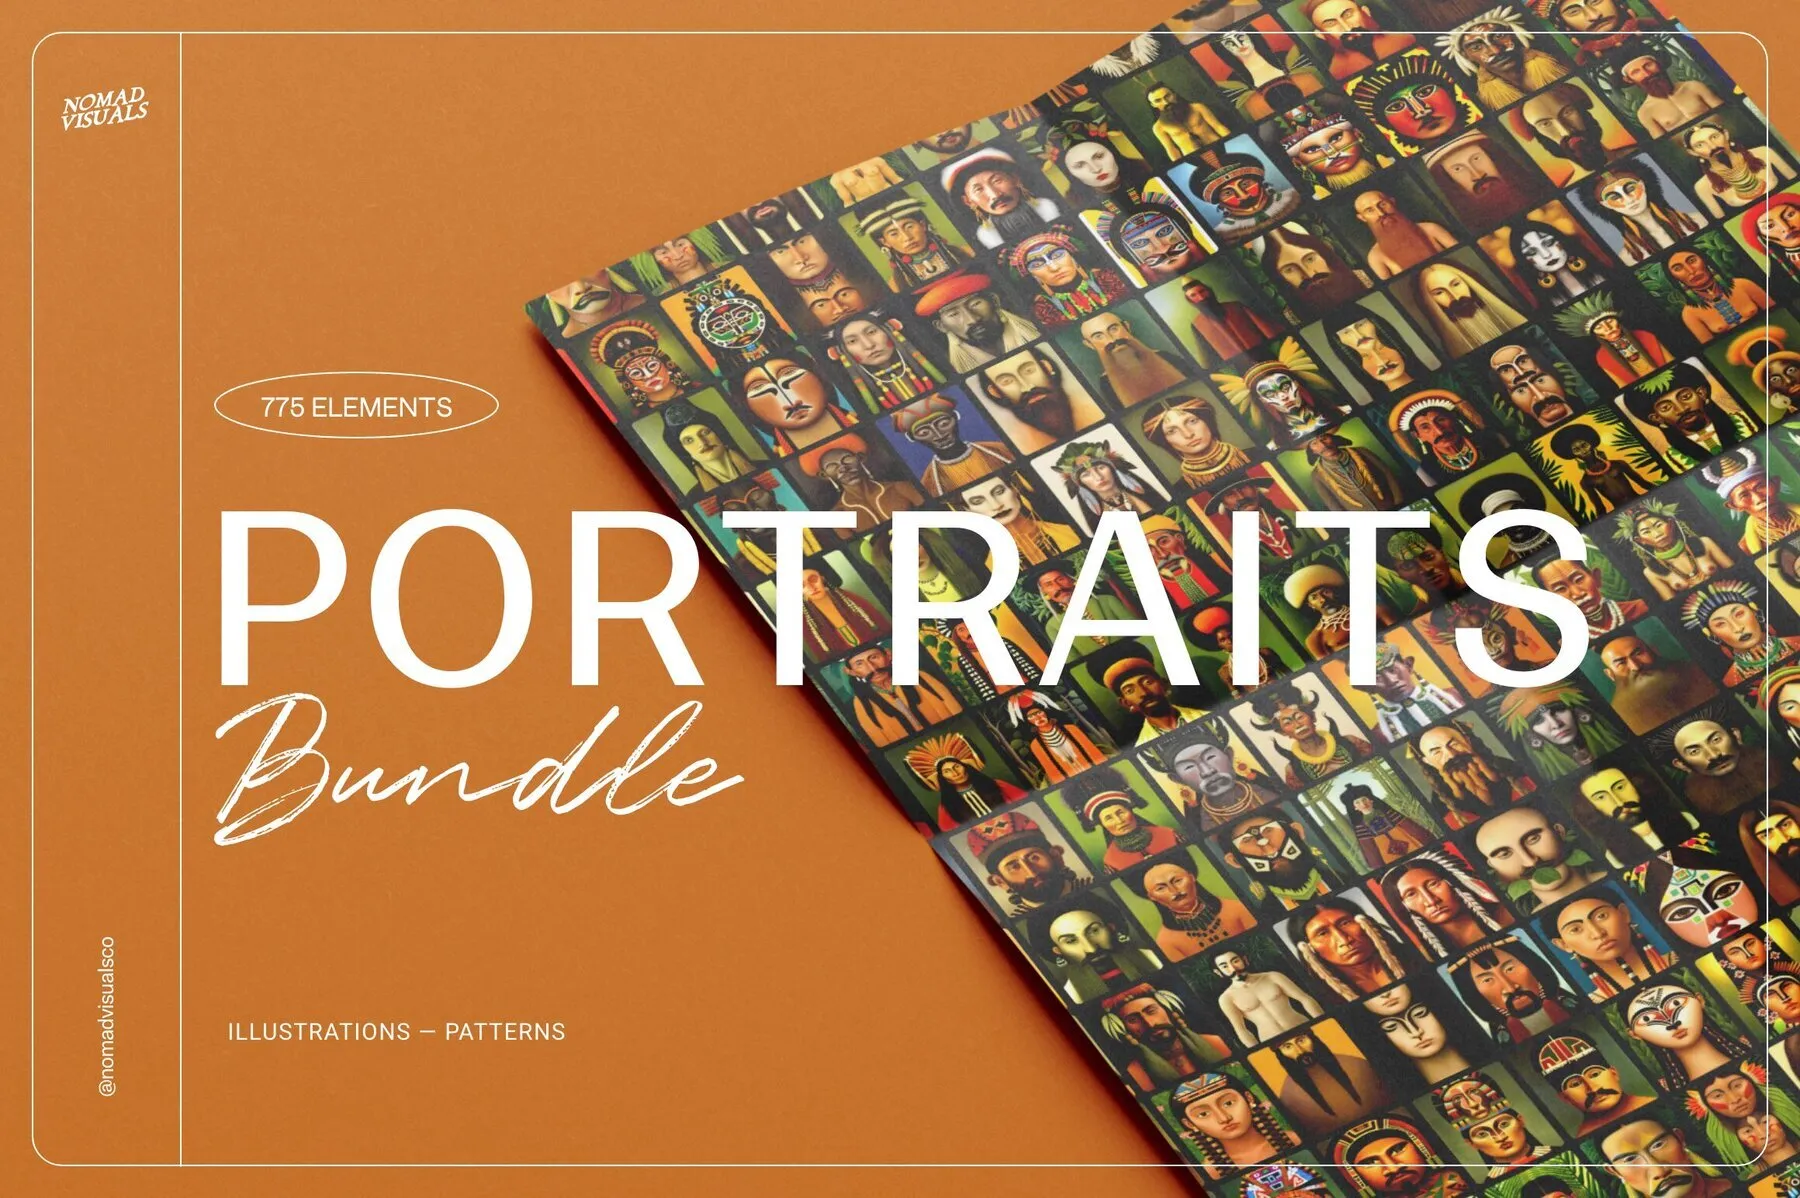 Portraits Illustrations Bundle